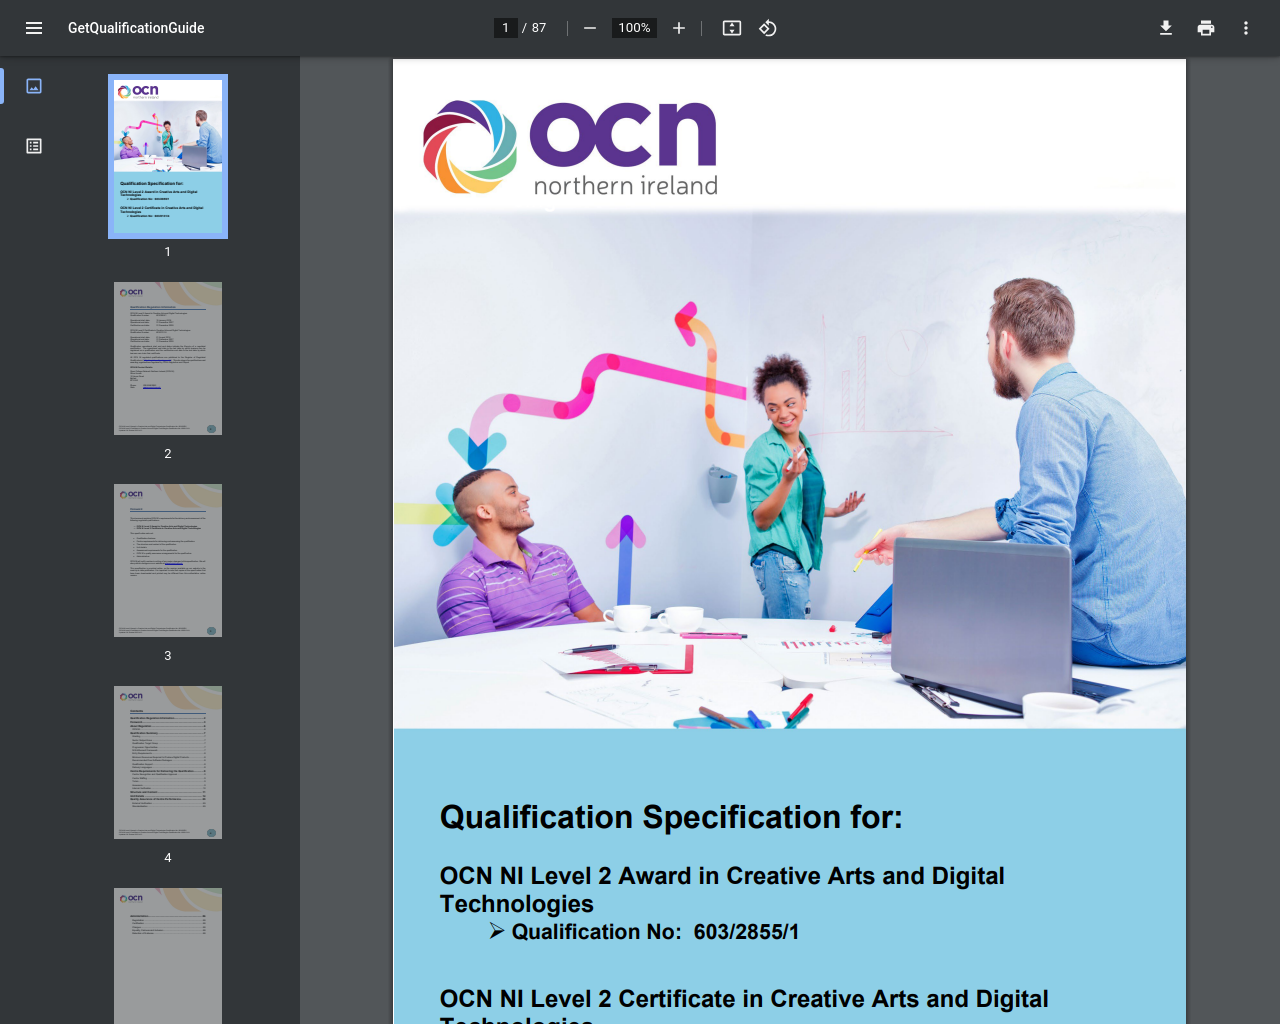 OCN NI Level 2 Certificate in Creative Arts and Digital Technologies